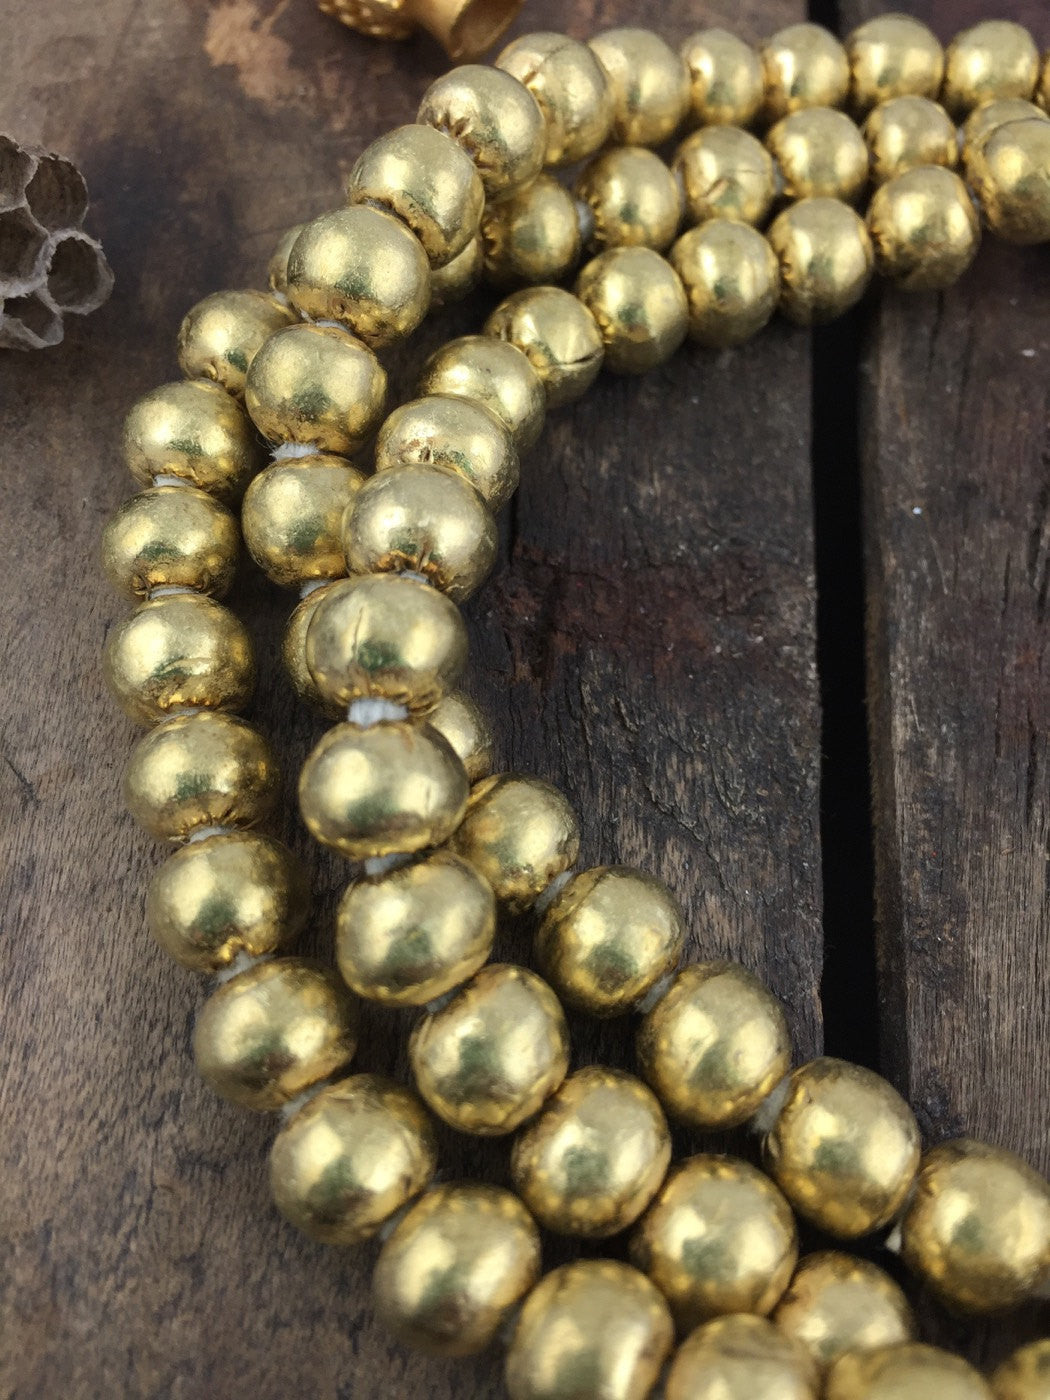 Golden Brass Round Seam Beads 8x6mm, from Ethiopia, African Metal Spacer Beads, Non-Tarnish Metal Jewelry Making Supply, 32" circular strand - ShopWomanShopsWorld.com. Bone Beads, Tassels, Pom Poms, African Beads.